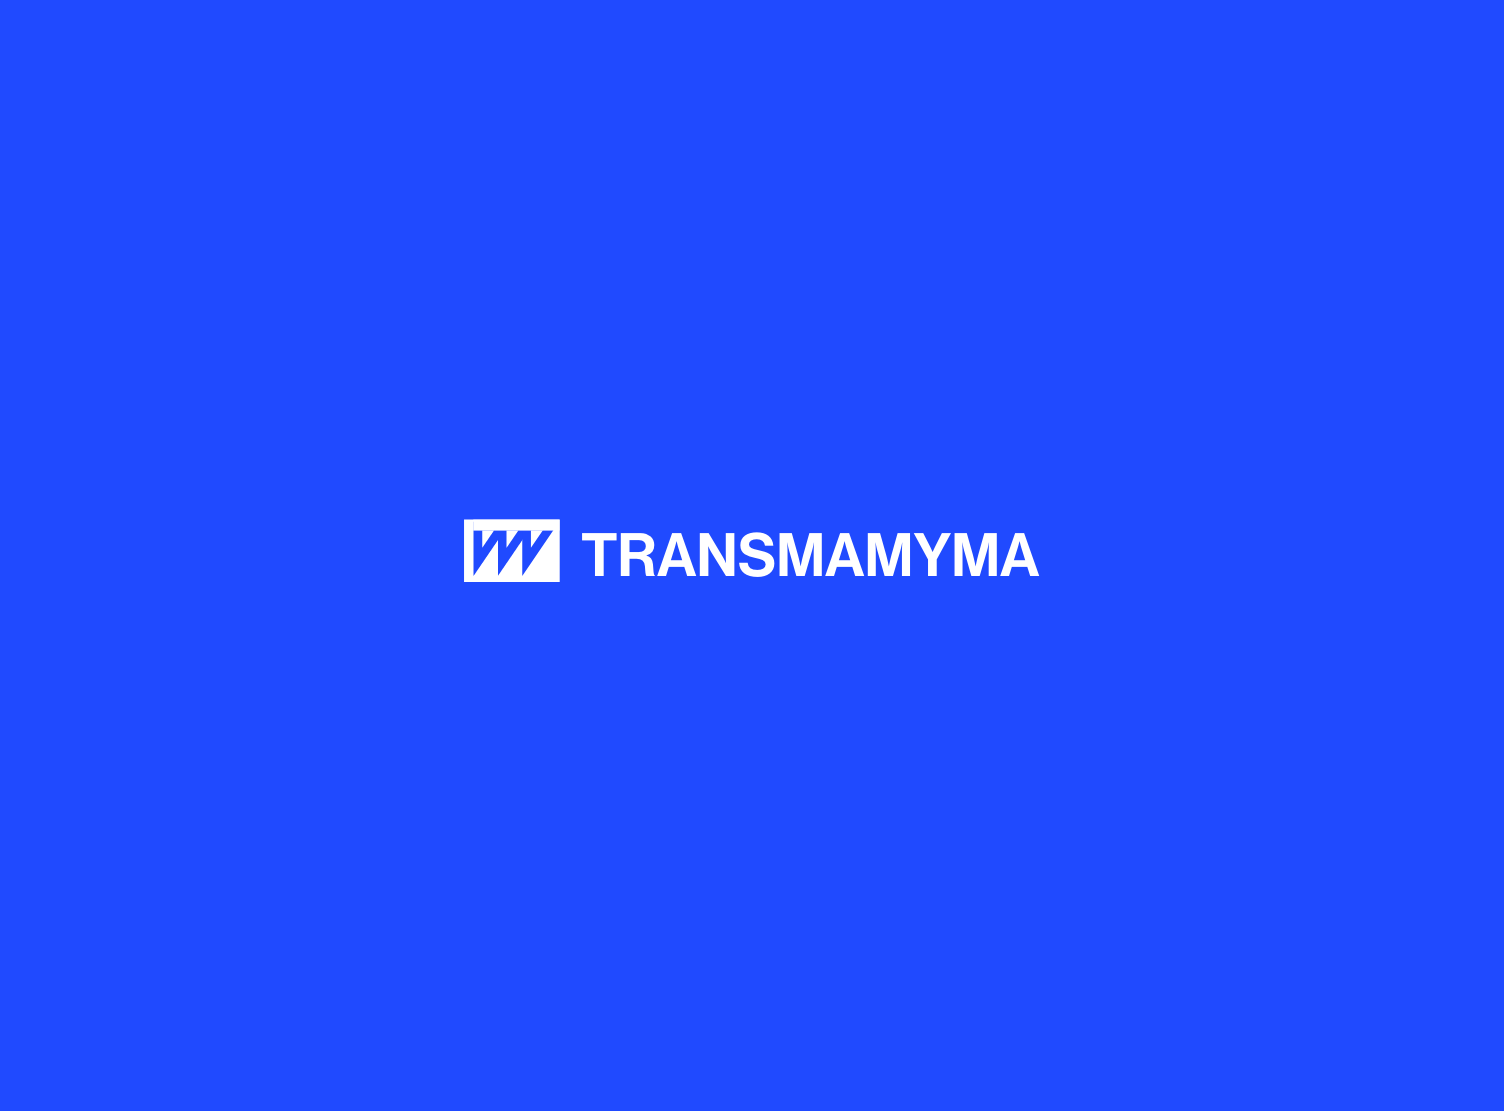 Transmamyma Website Design and Development